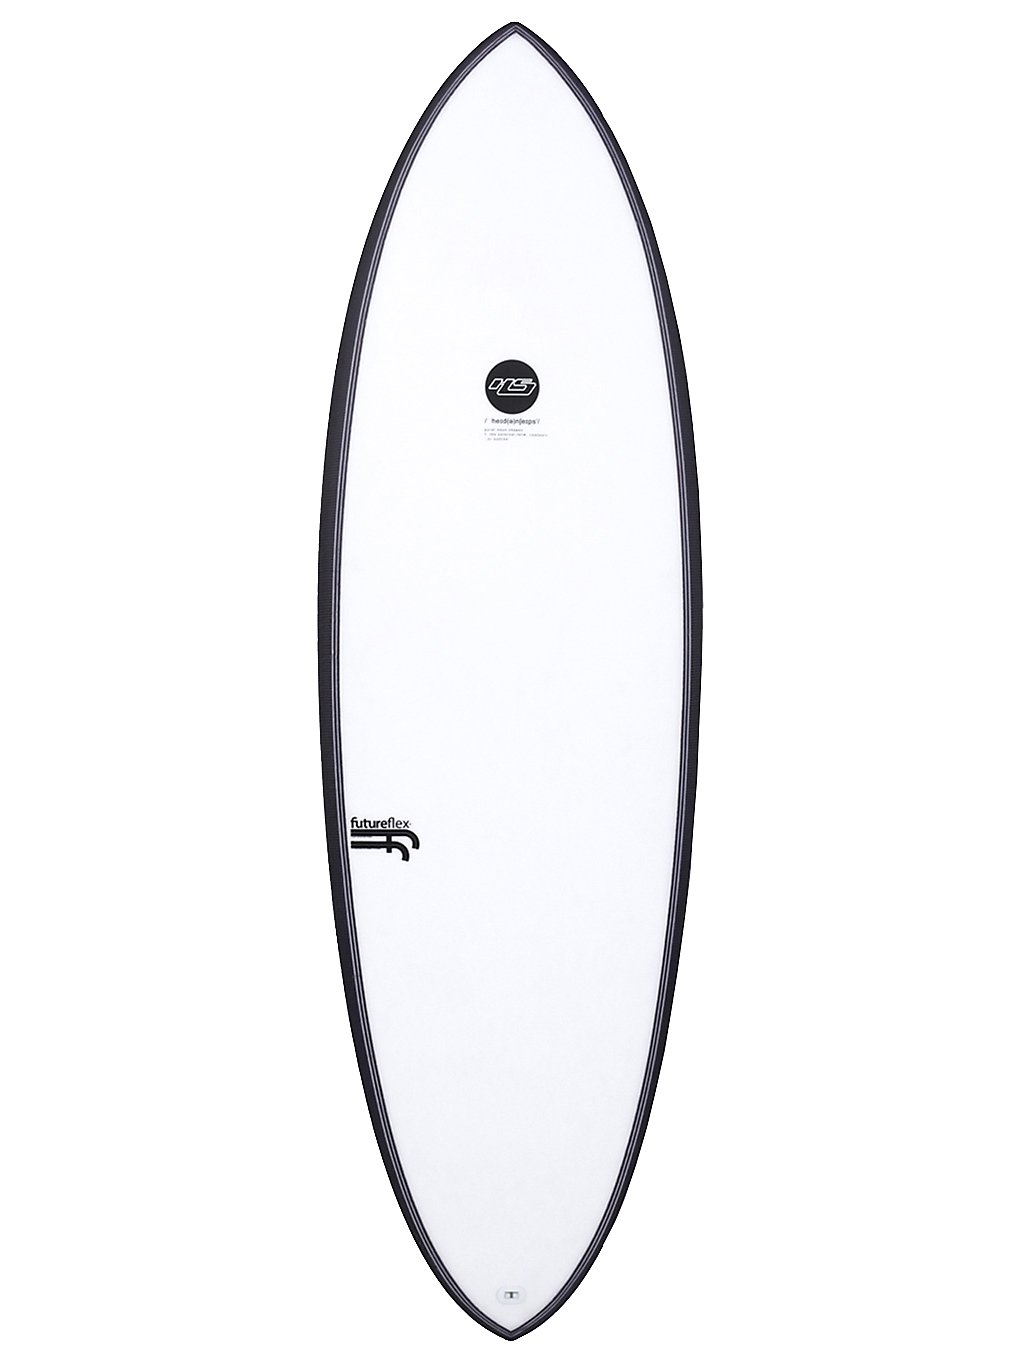 Haydenshapes Hypto Krypto Future-Flex Futures 5'10 Surfboard black circle branding